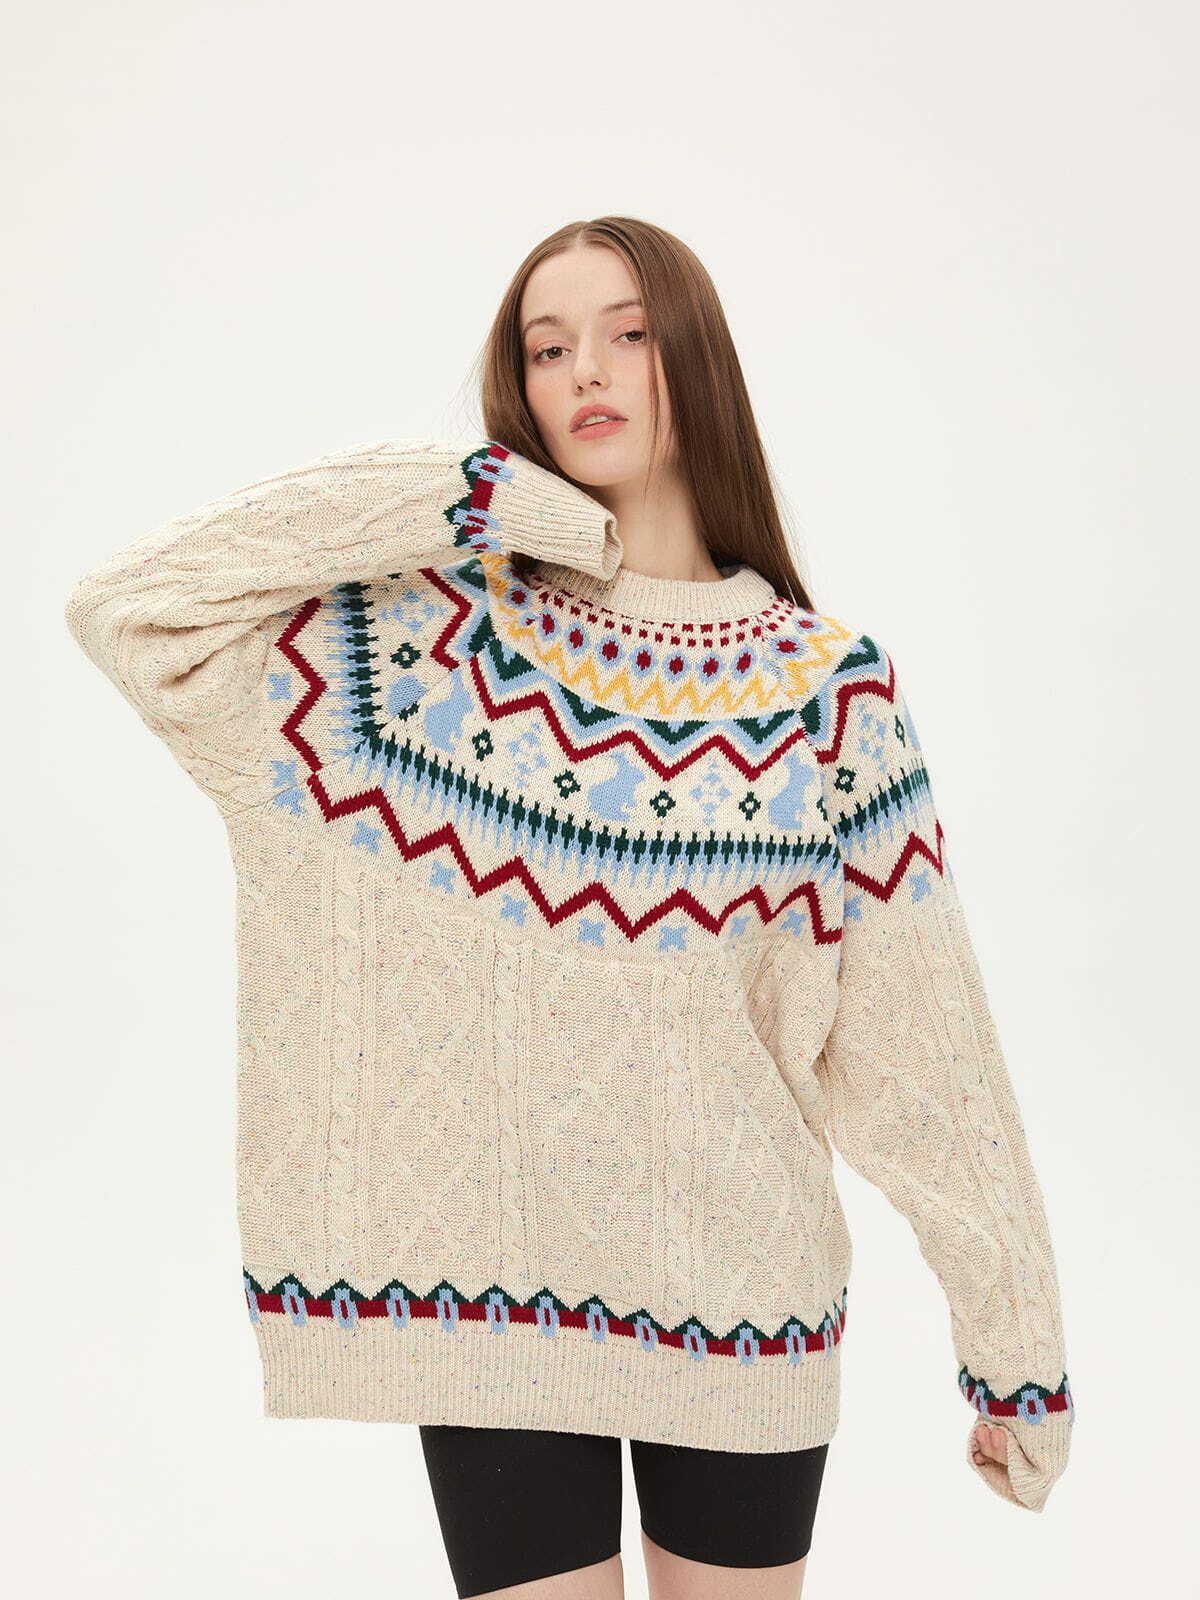 fair isle knit sweater cozy retro charm 8391